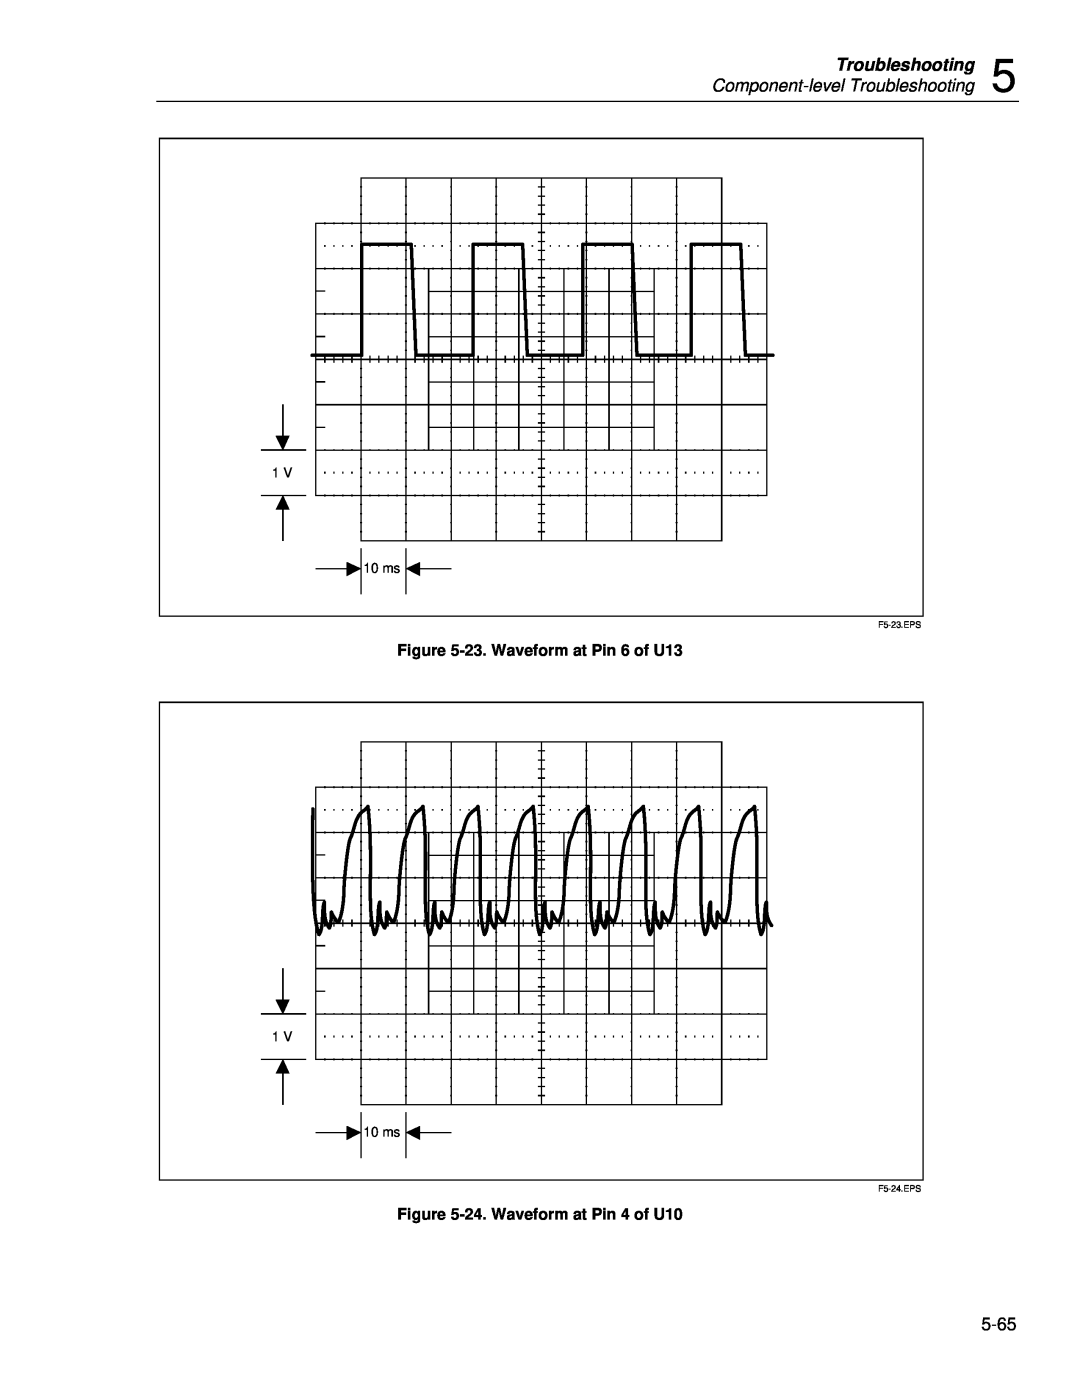 Fluke 5720A Component-level Troubleshooting, 23. Waveform at Pin 6 of U13, 24. Waveform at Pin 4 of U10, F5-23.EPS 